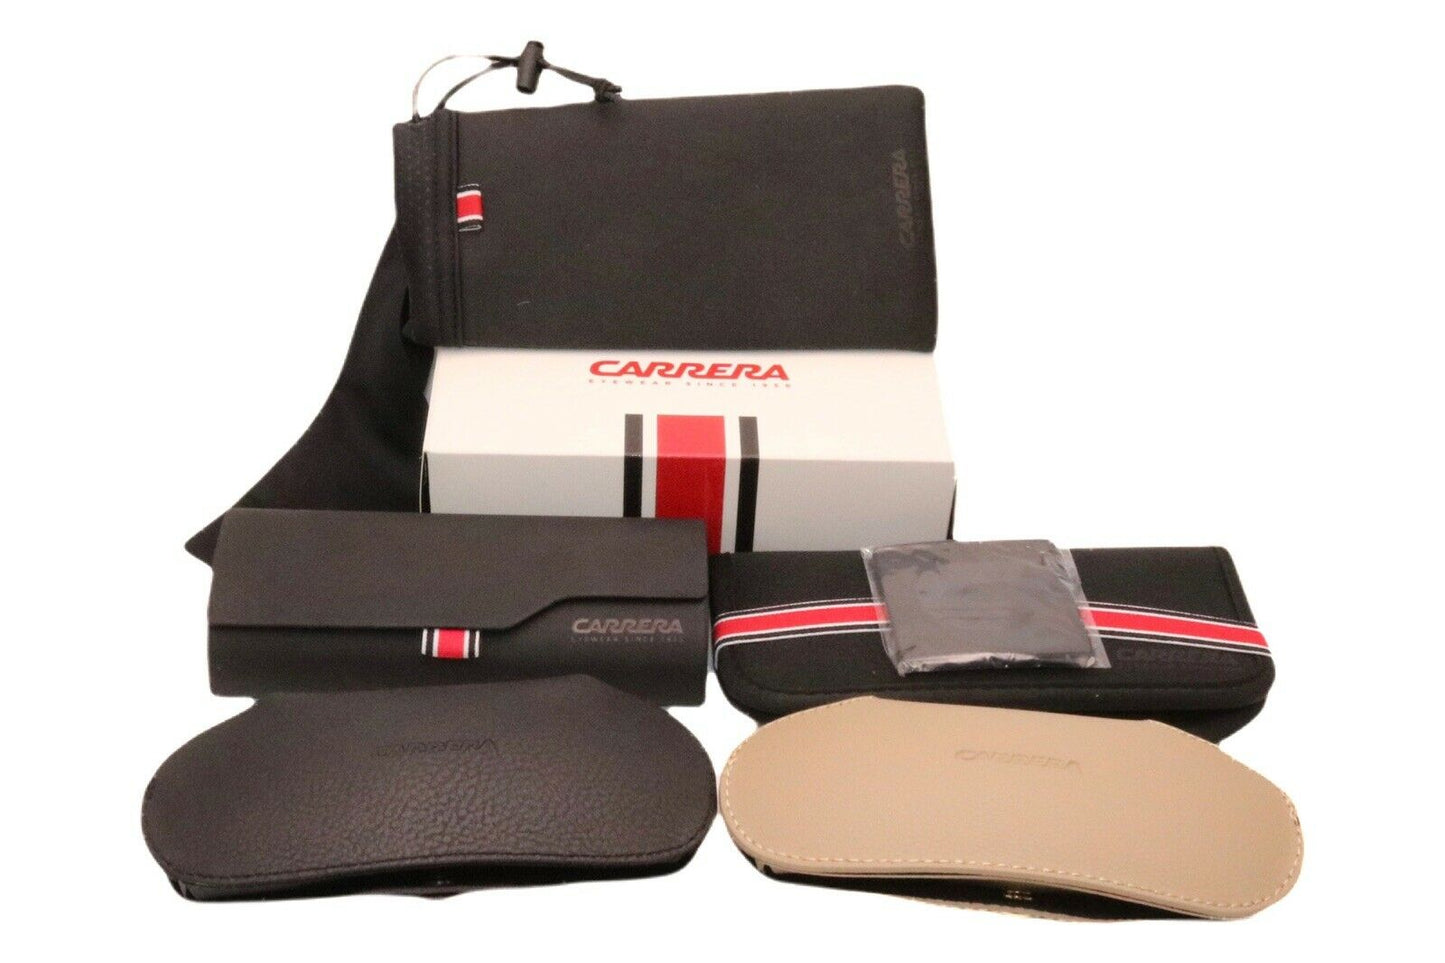 Carrera 1046/S-0086 9O 99mm New Sunglasses